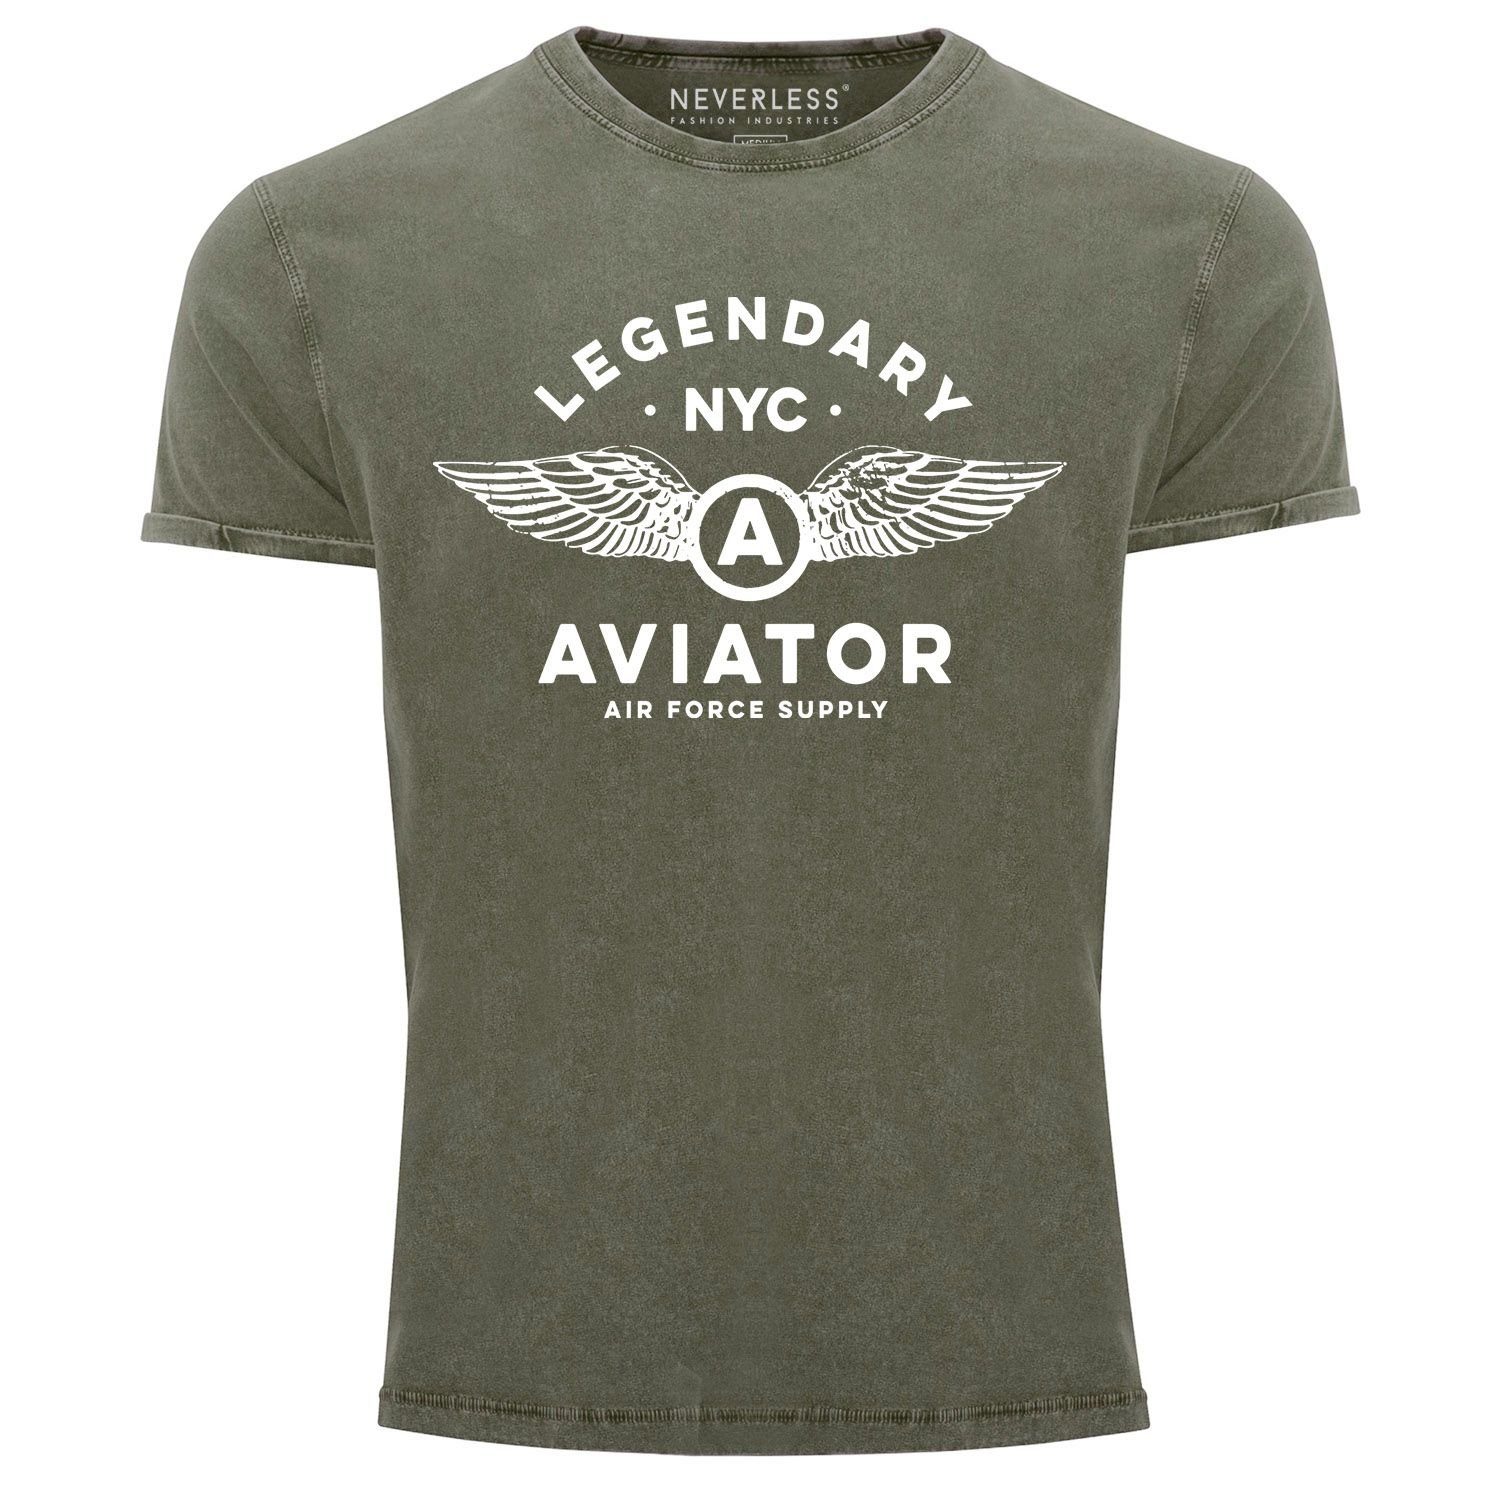 Neverless Print-Shirt Legendary Printshirt Herren Flügel oliv Vintage Slim Look Aviator Air Fit Shirt Neverless® NYC Luftwaffe Used Print mit Force